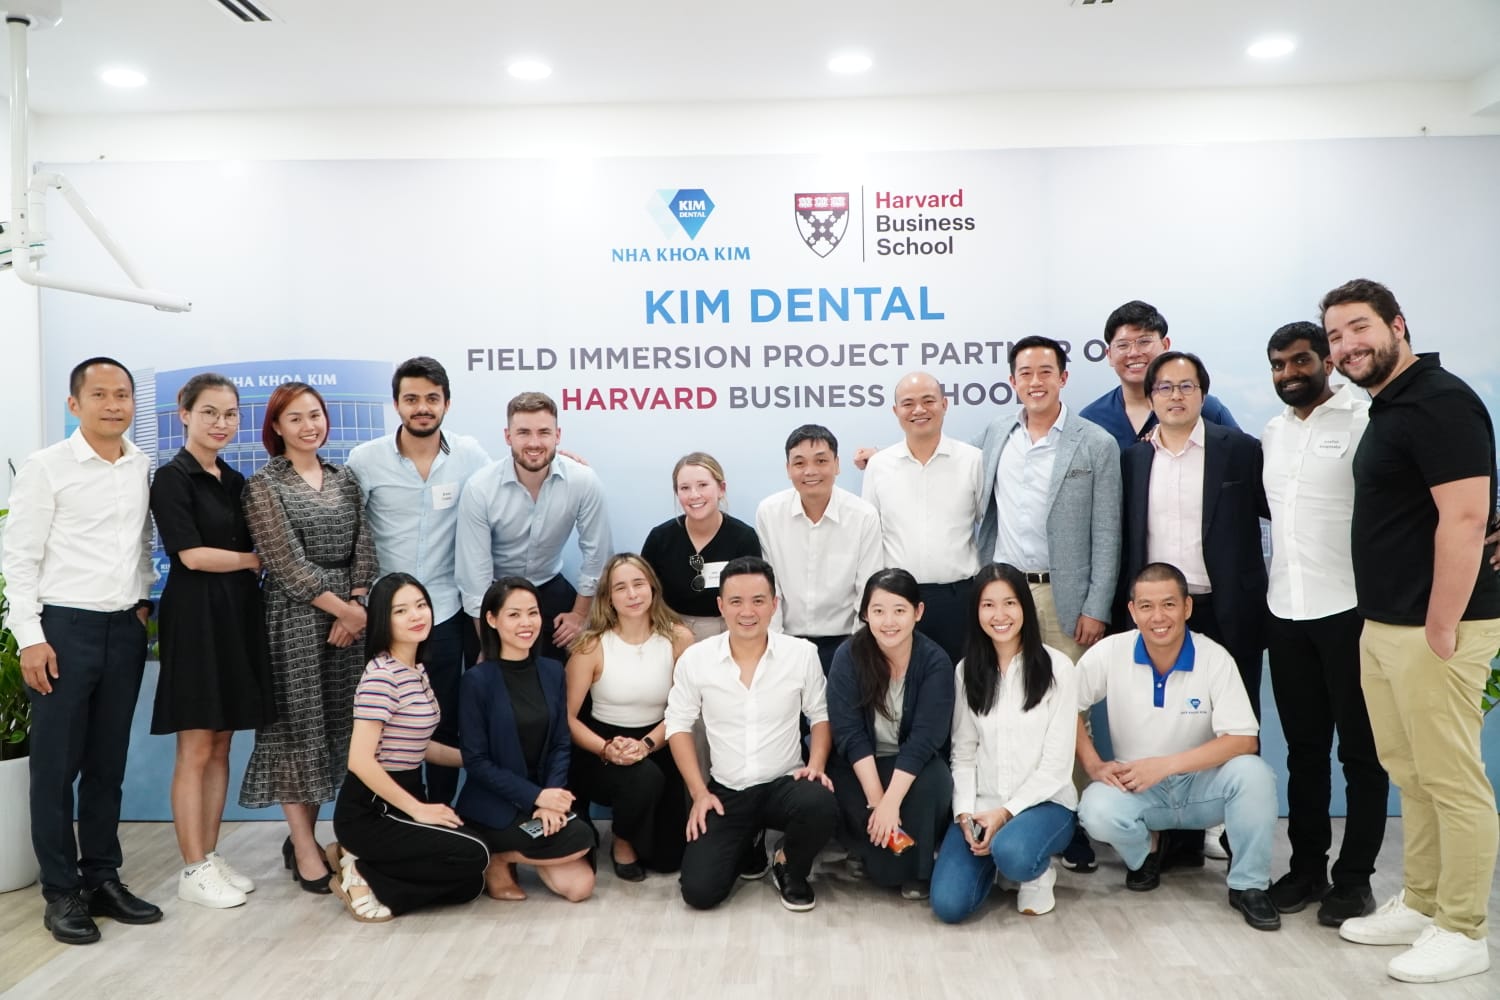 Kim Dental team photo at Harvard Business School